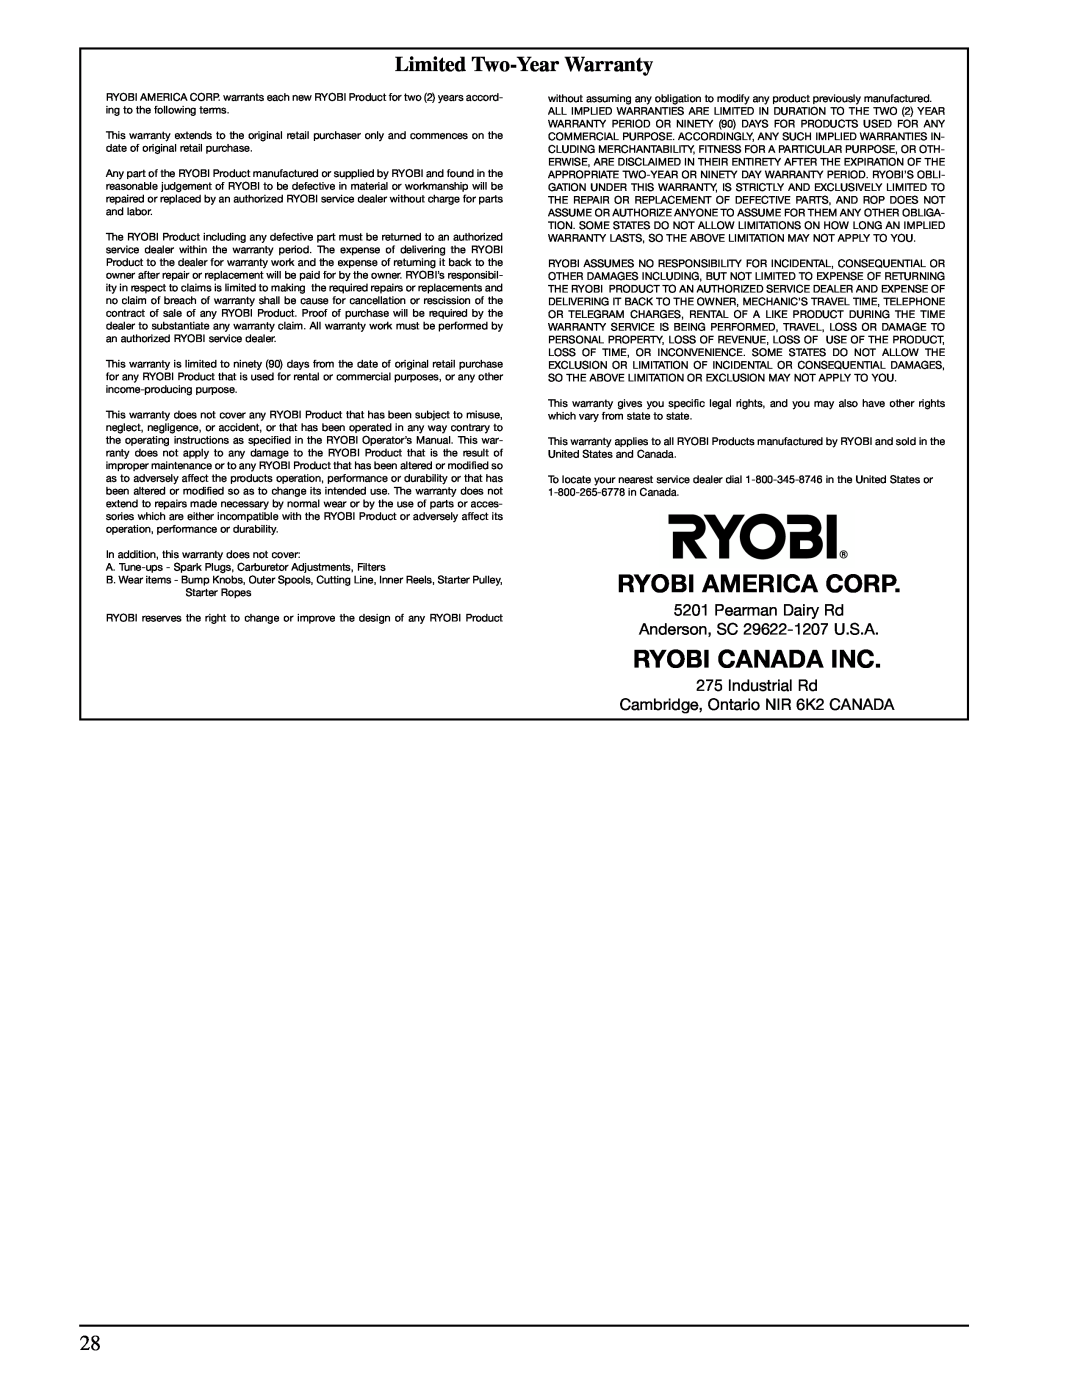 Ryobi 990r manual Ryobi America Corp, Ryobi Canada Inc, Limited Two-Year Warranty 